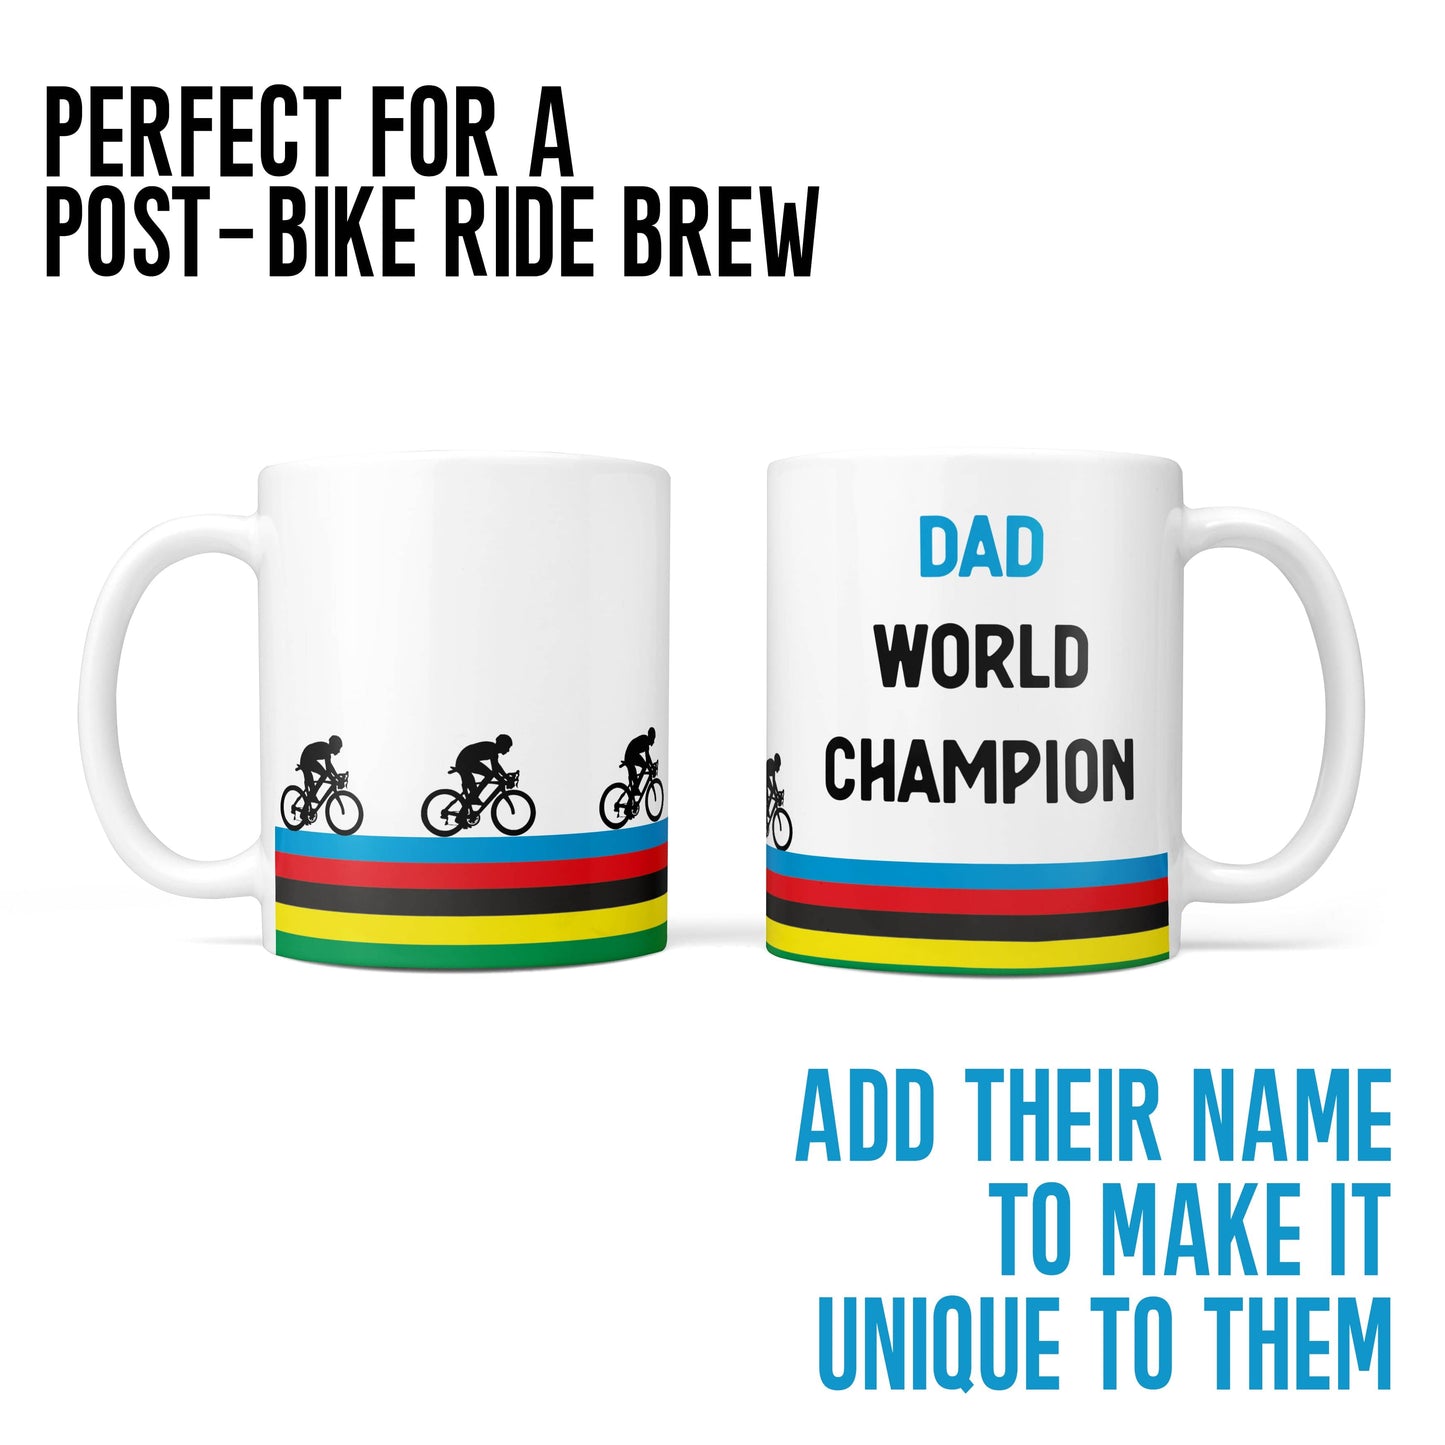 World champion cyclist rainbow jersey mug gift for cycling fan